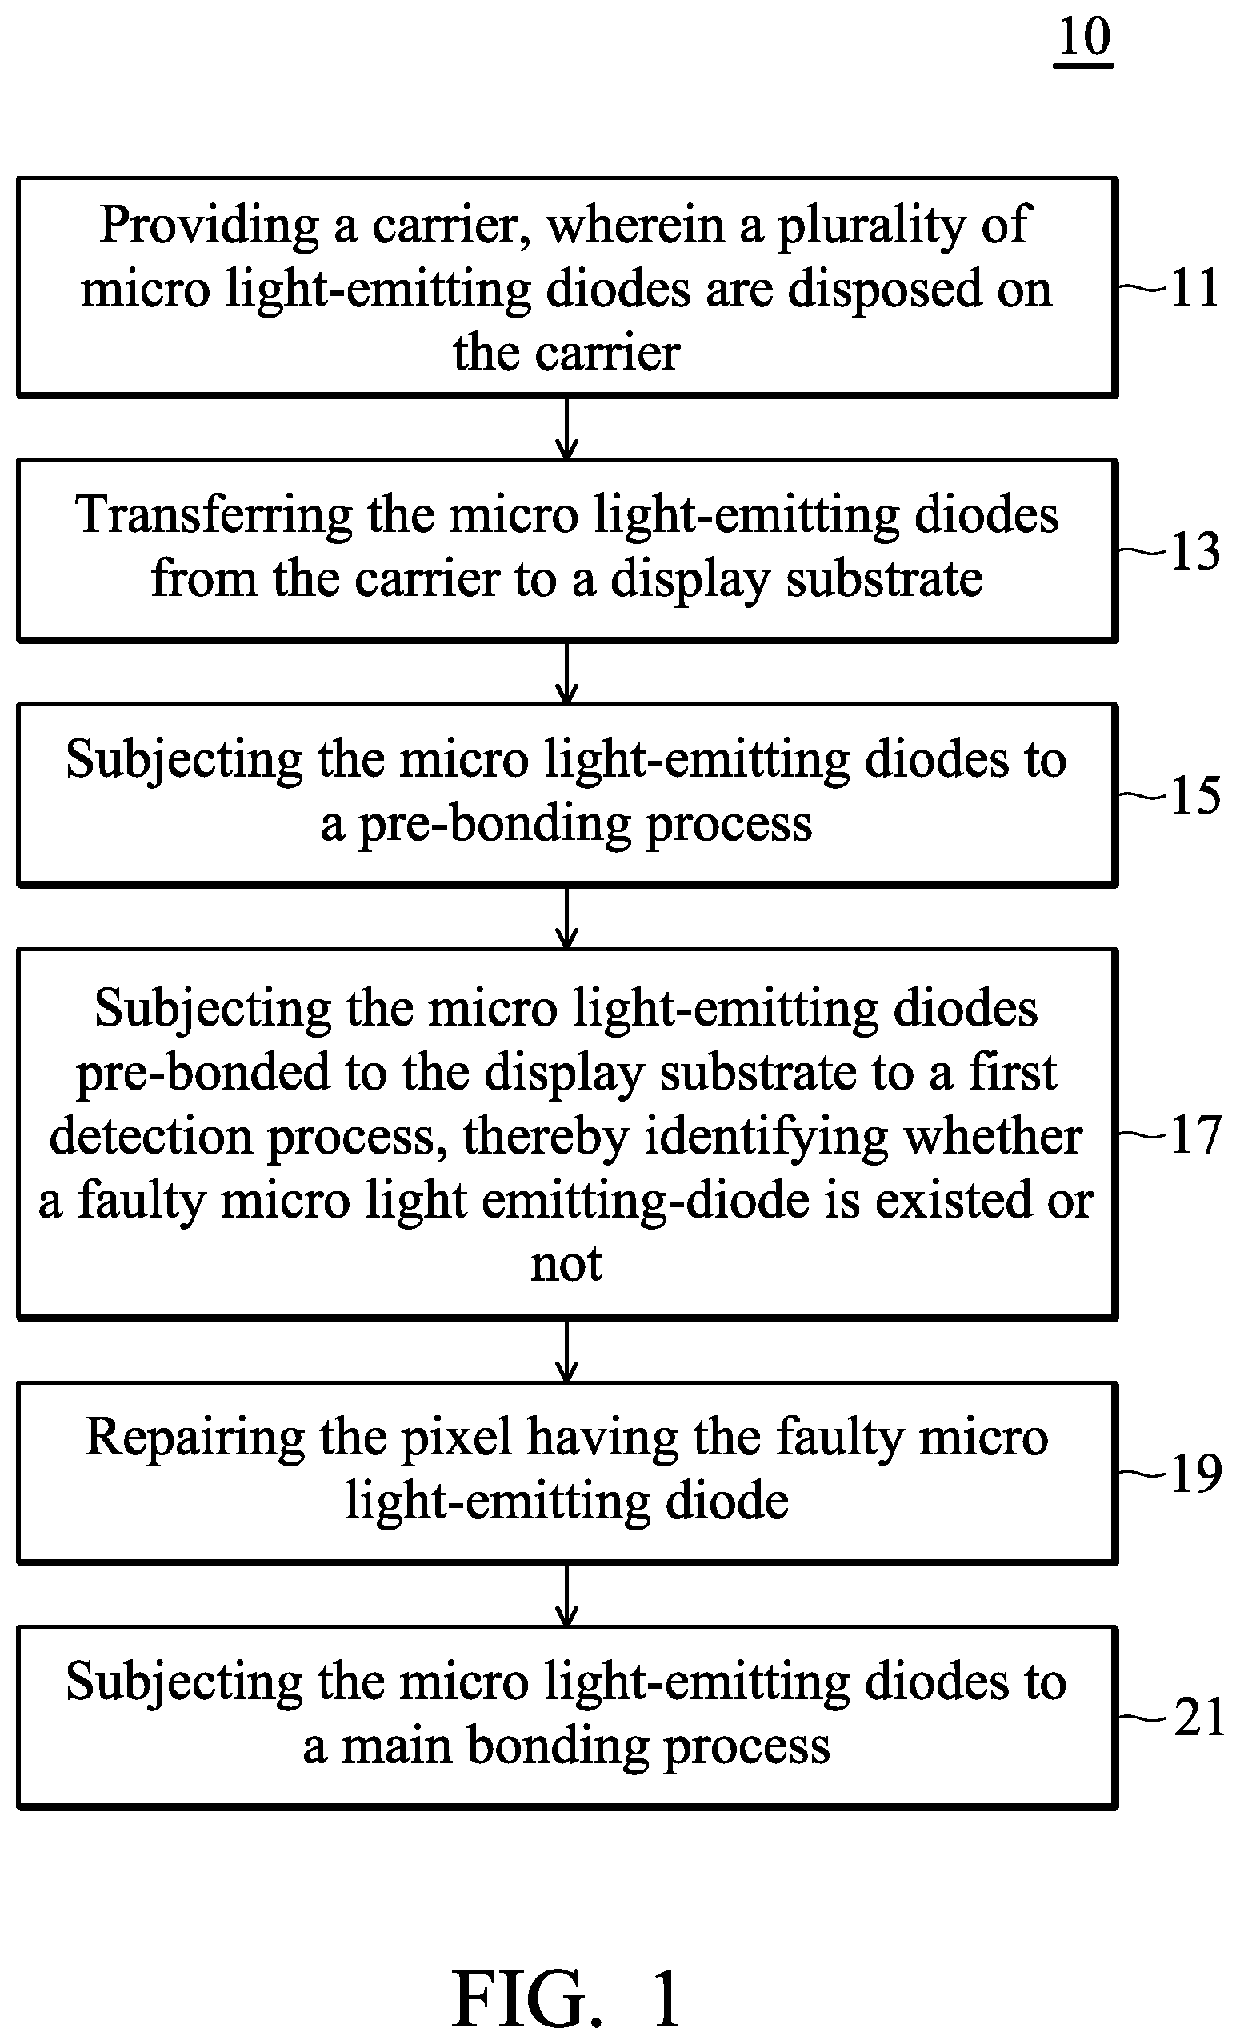 Method for fabricating micro light-emitting diode display